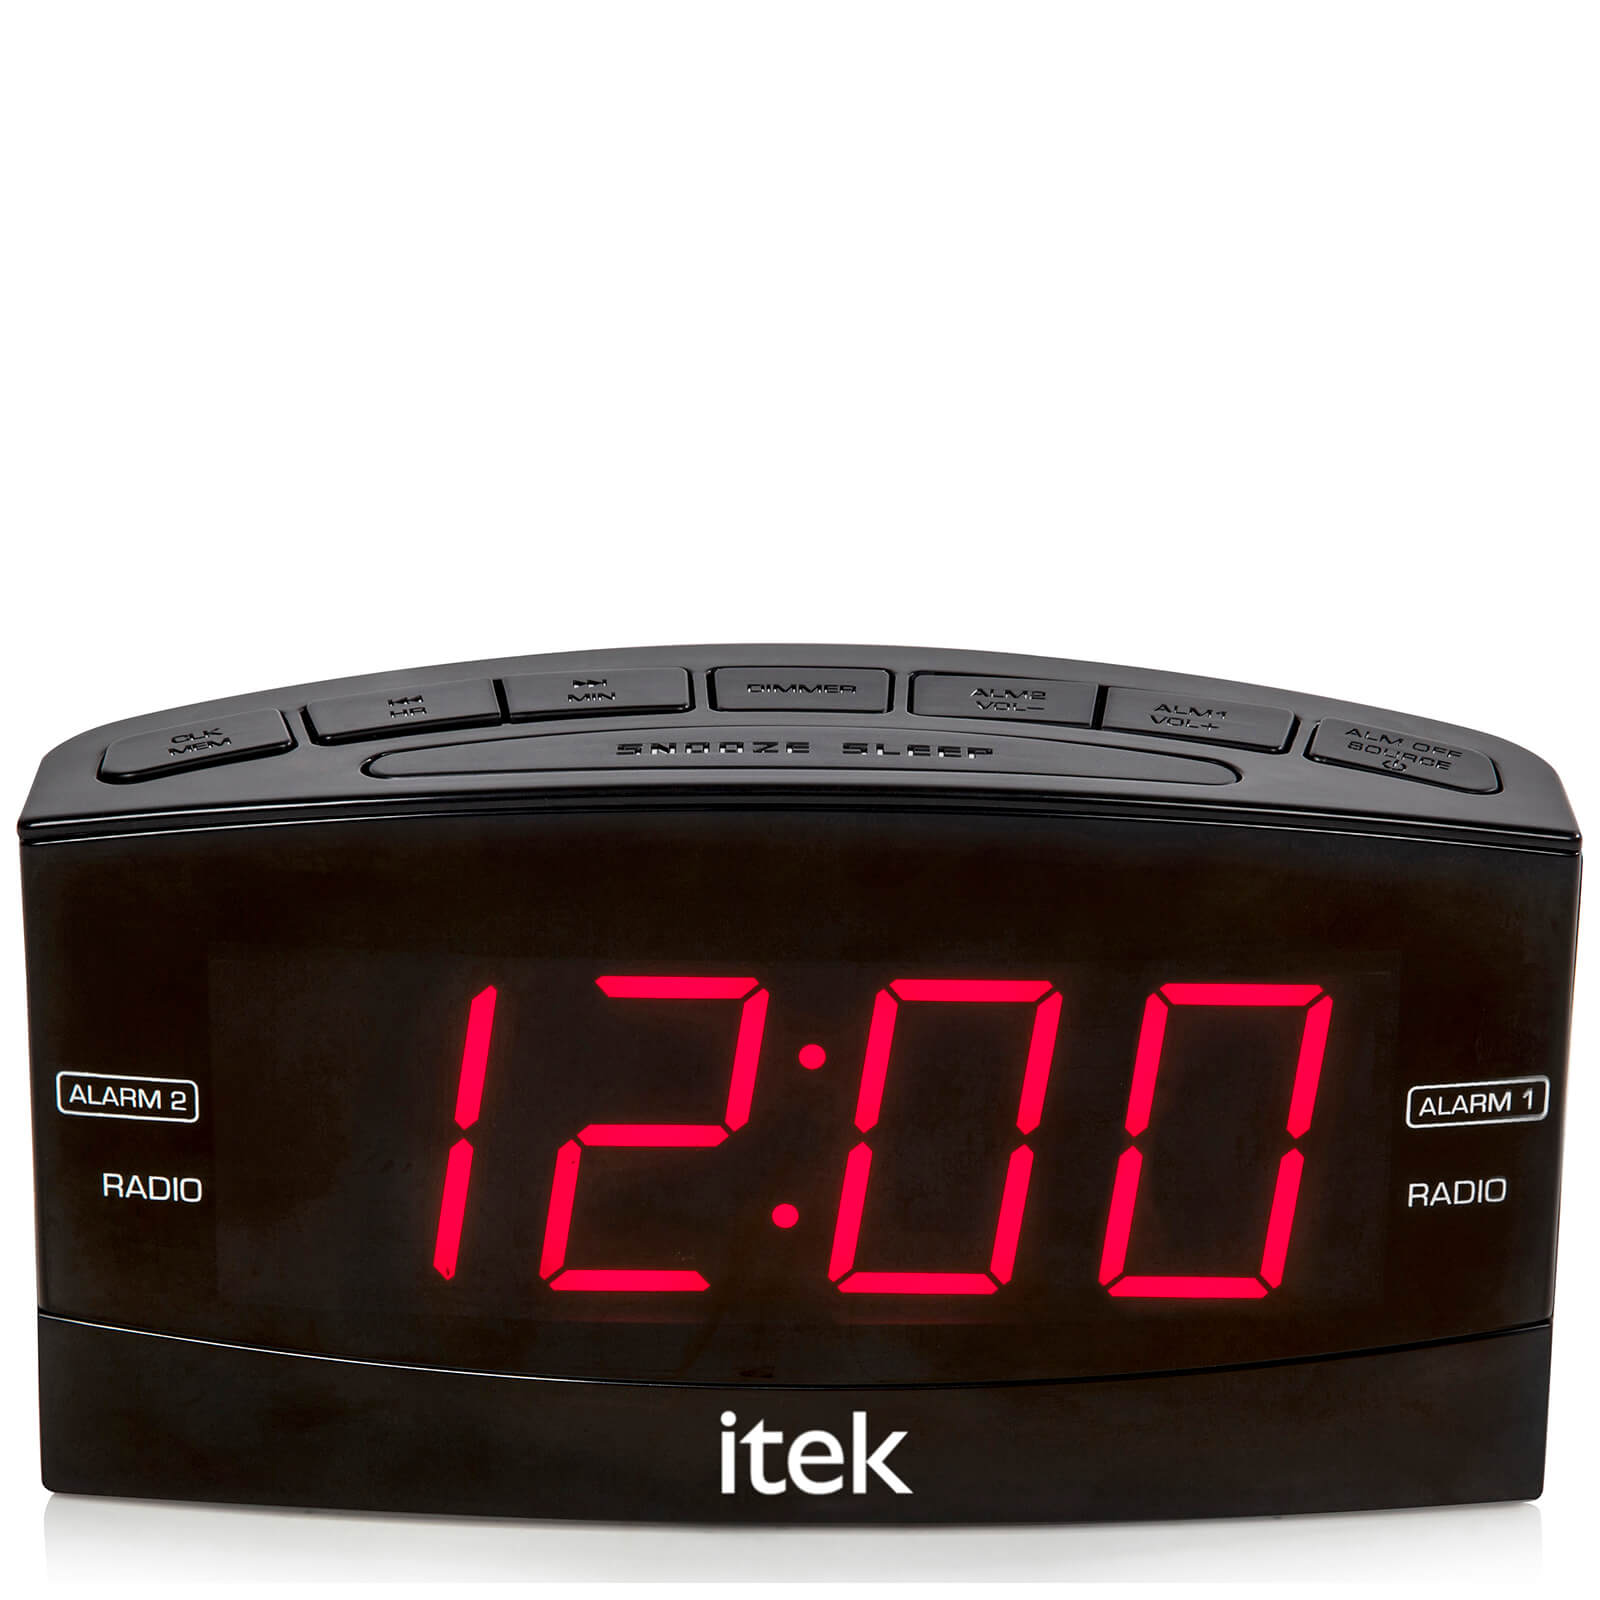 iTek Senior Big Button Jumbo LED Alarm Clock Radio - Black | IWOOT1600 x 1600